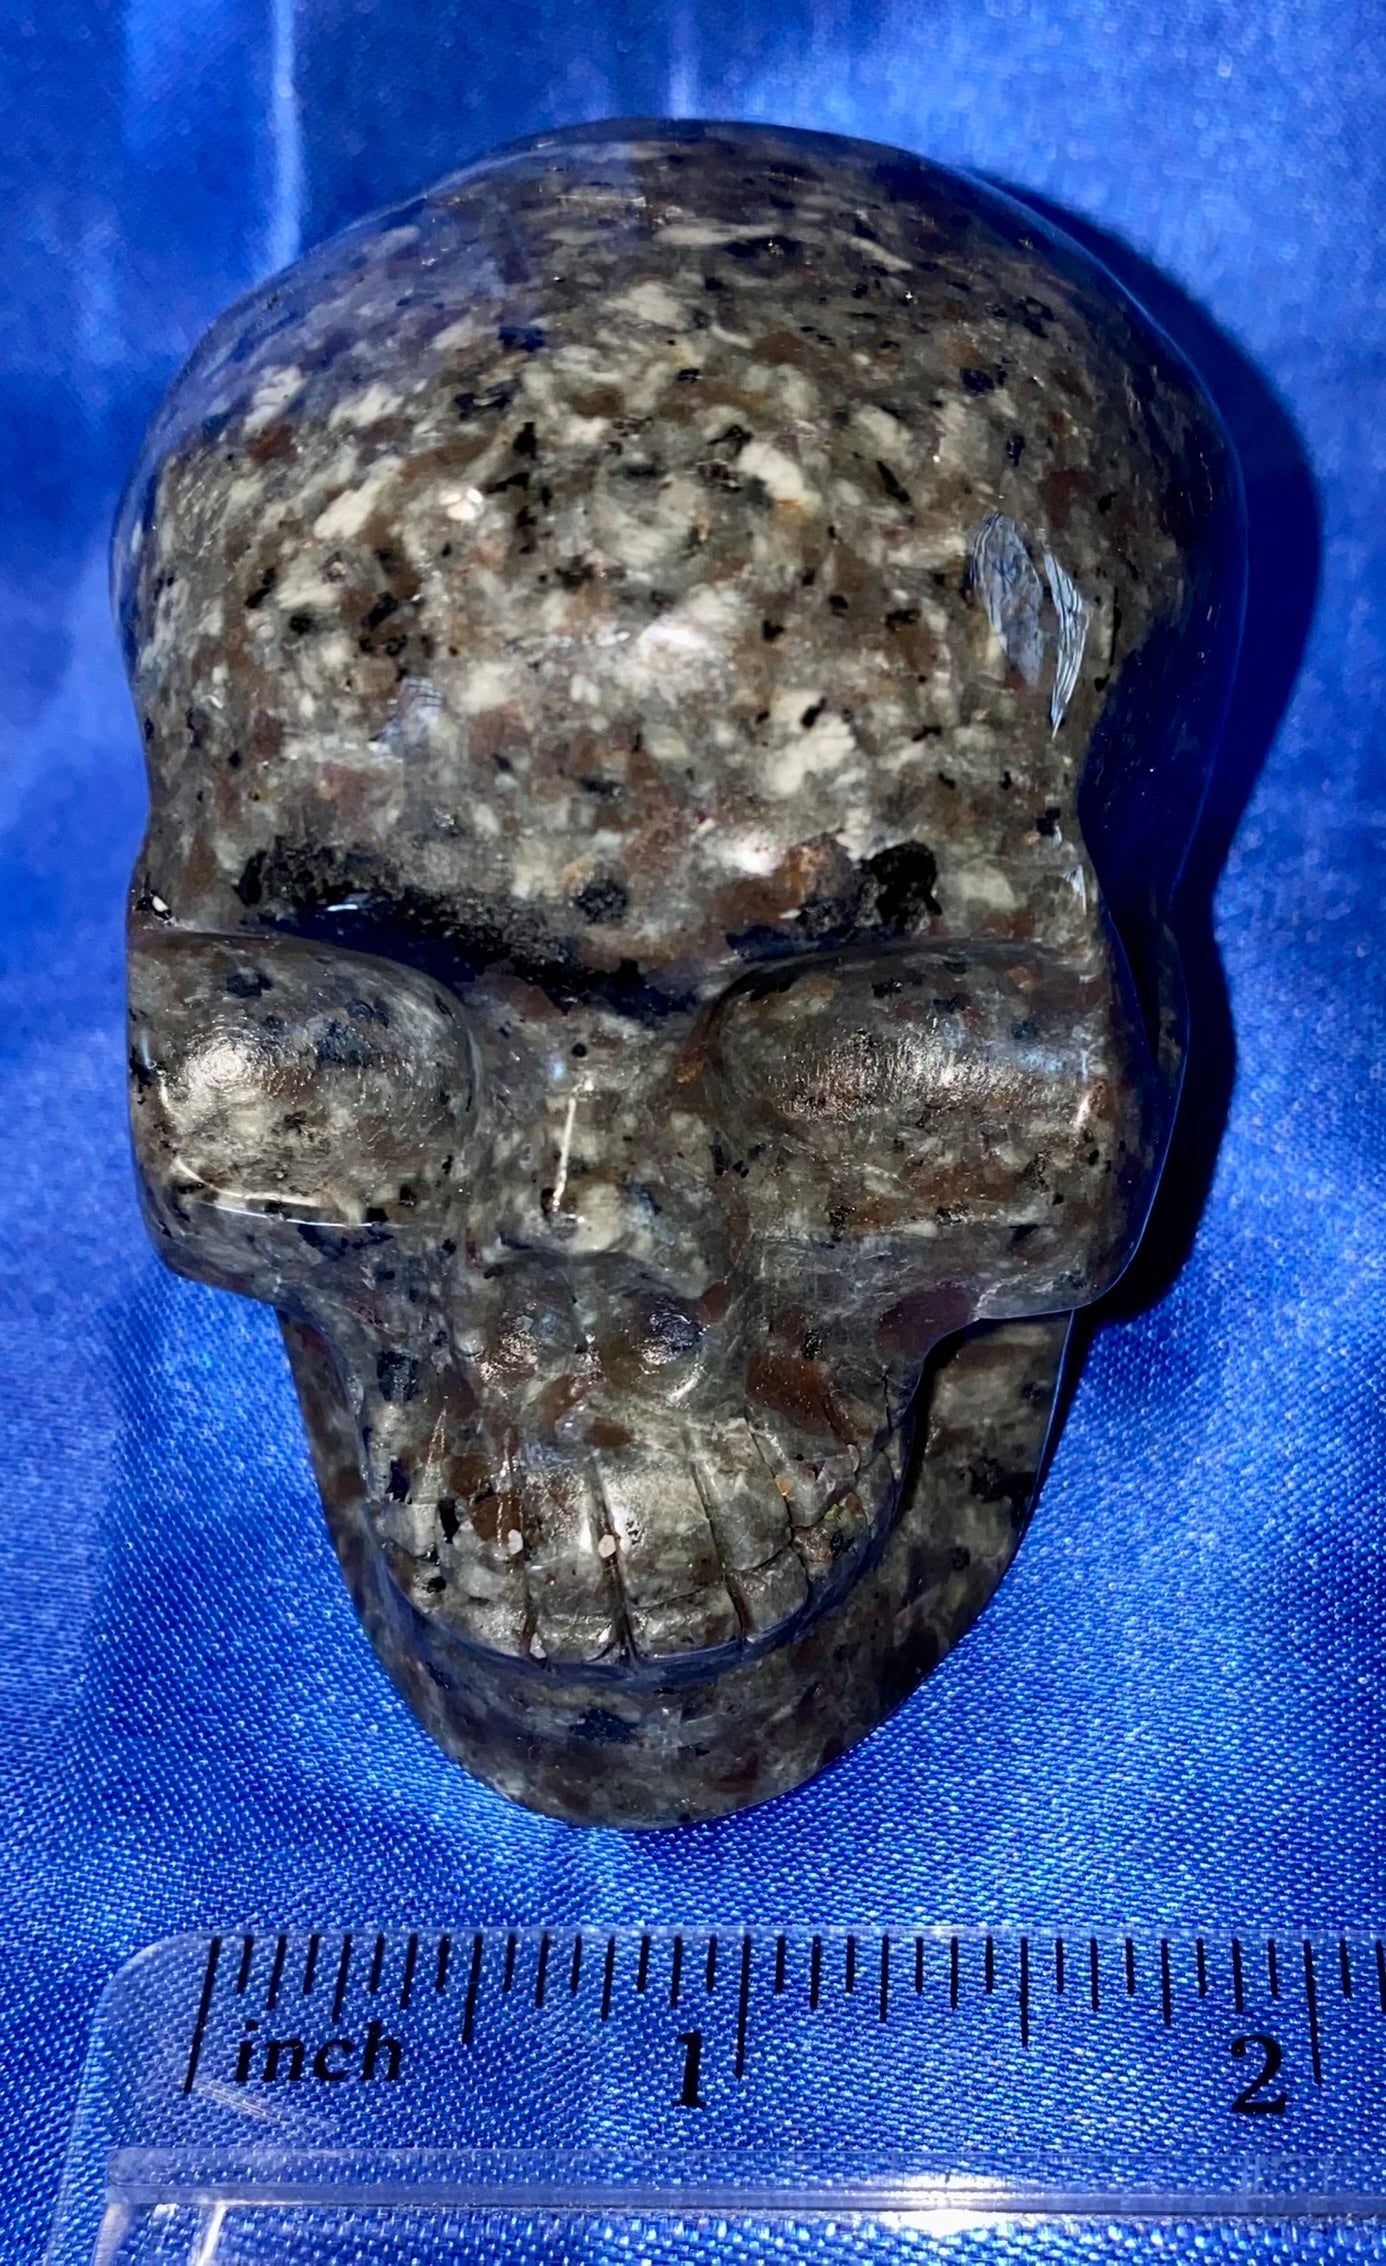 Yooperlite Stone Skull 2 (UV Reactive) - Halloween decor, spooky polished gray black stone sculpture glows red under blacklight